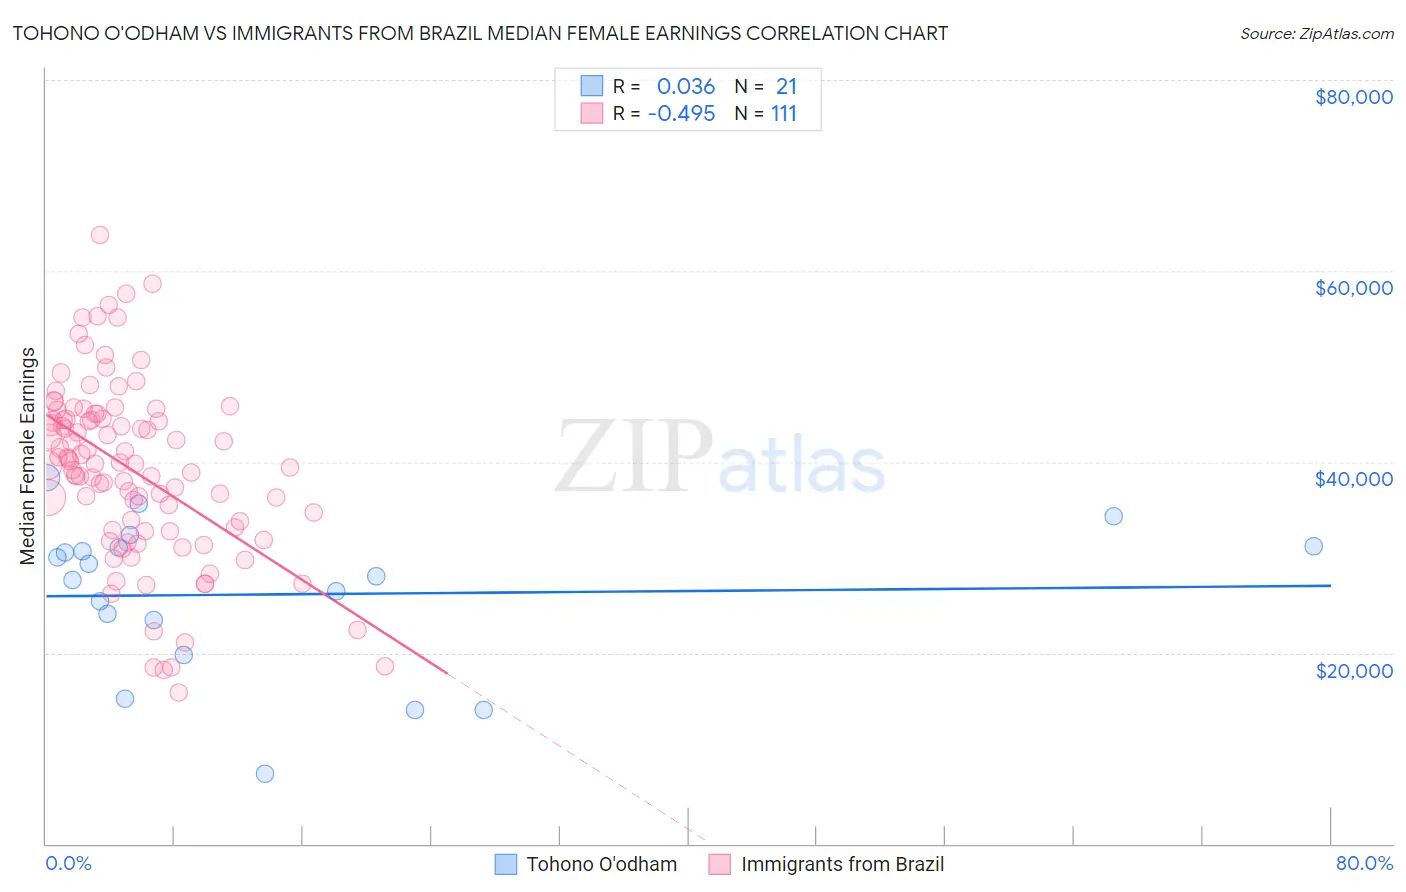 Tohono O'odham vs Immigrants from Brazil Median Female Earnings